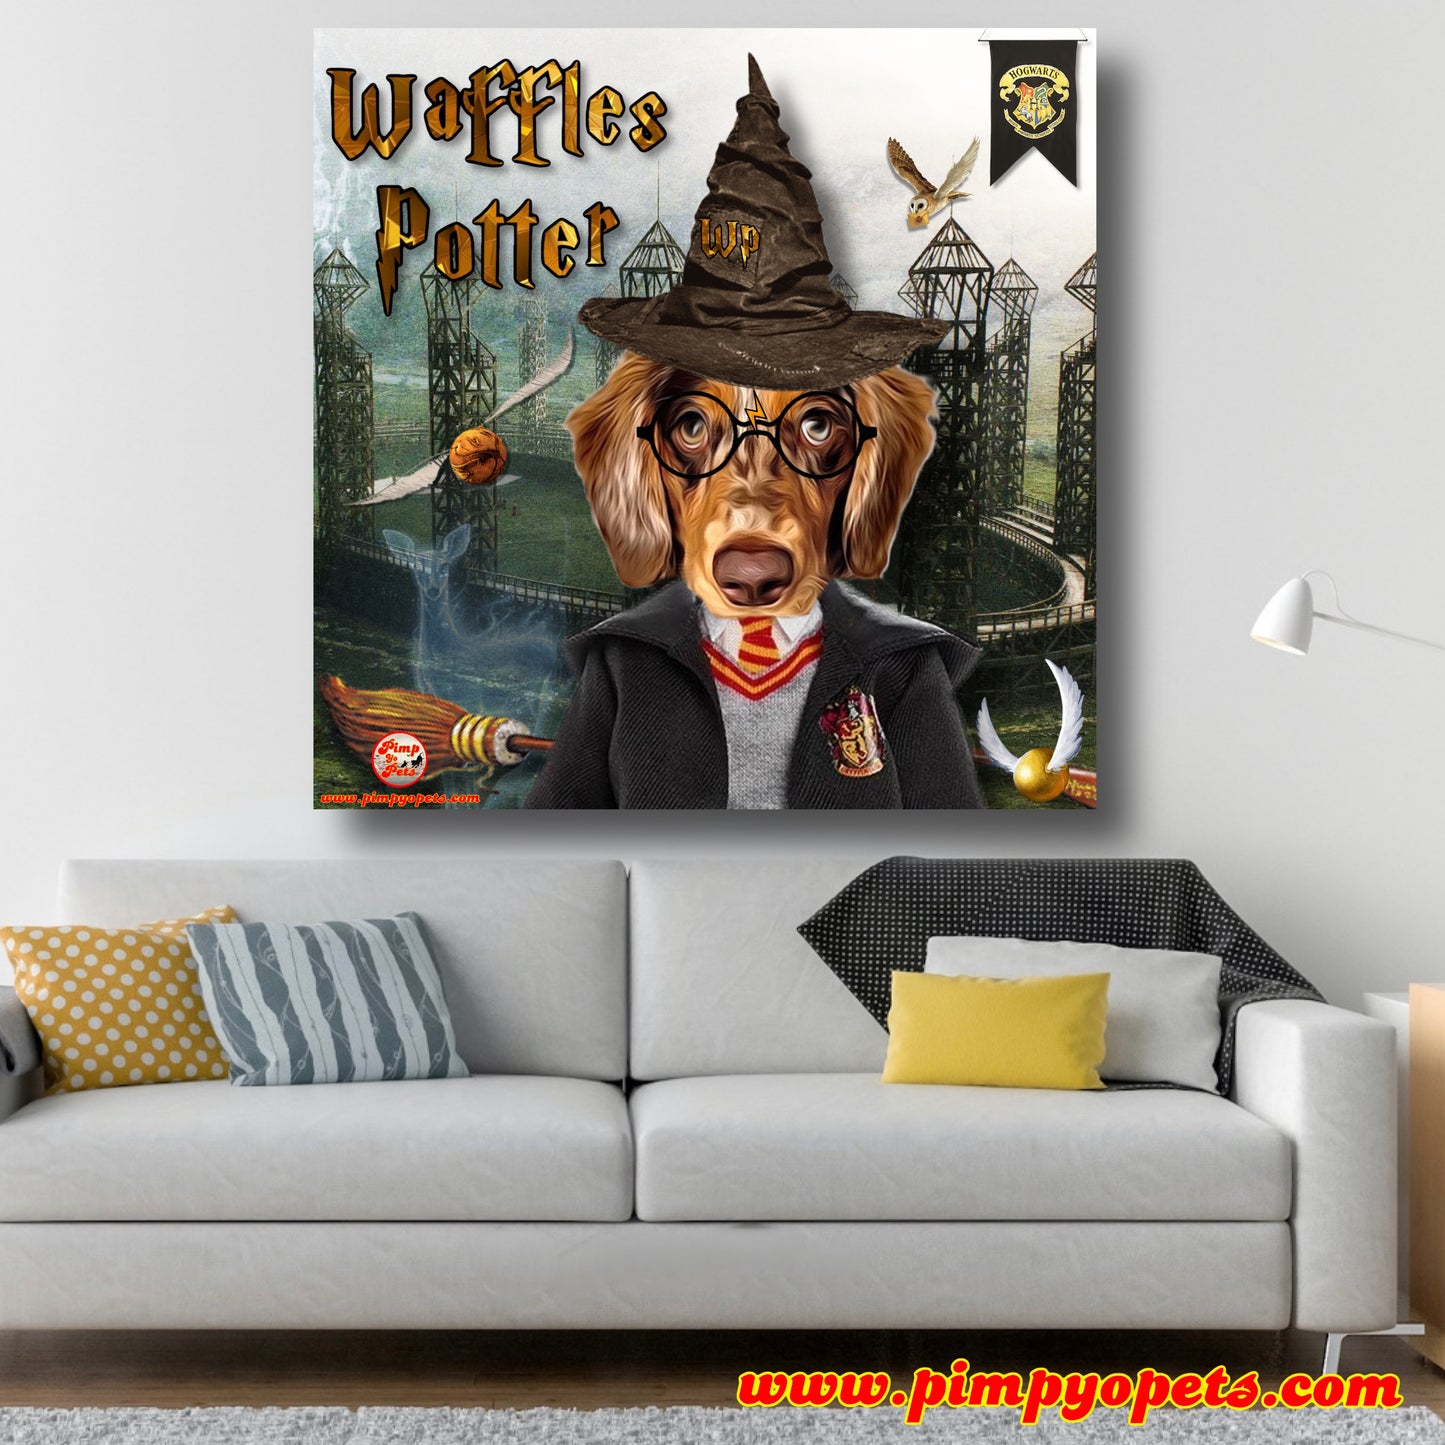 Doggy Potter Theme Pet Portraits on Canvas